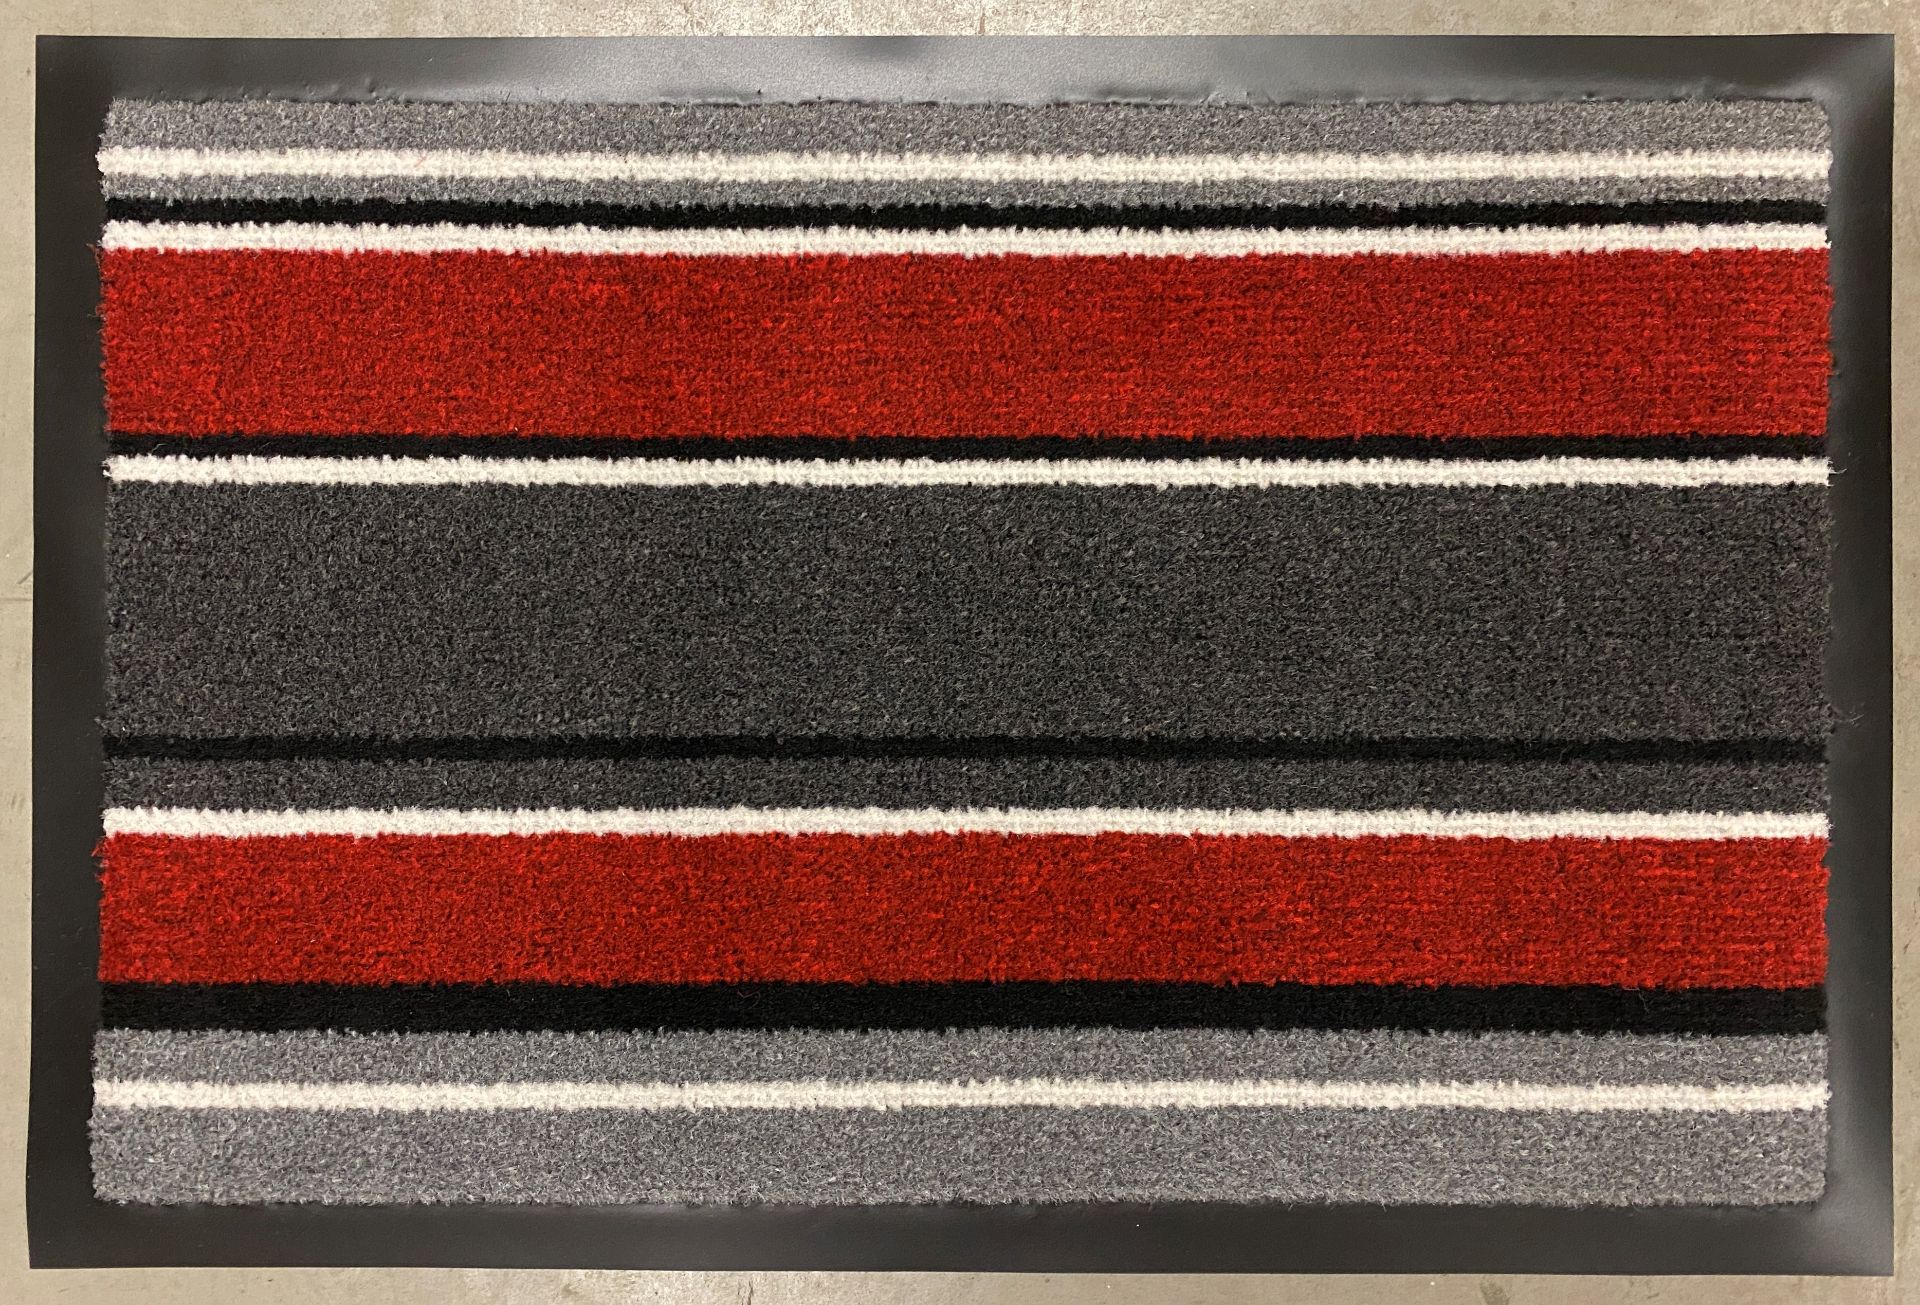 20 x Red/black/grey/white striped barrier mats 60cm x 40cm (D/E05)